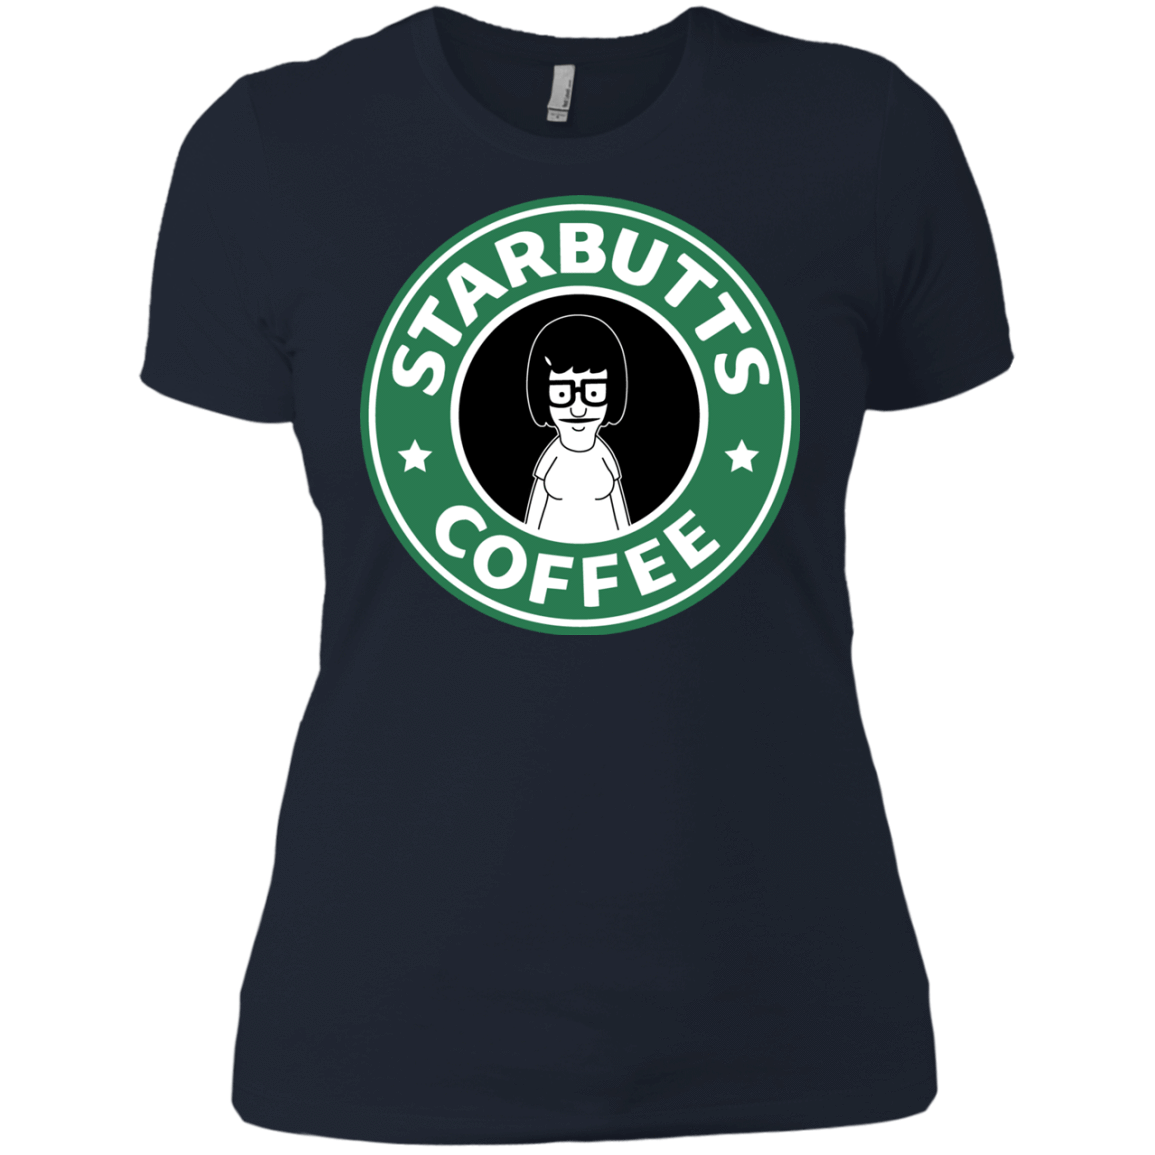 T-Shirts Midnight Navy / X-Small Starbutts Women's Premium T-Shirt